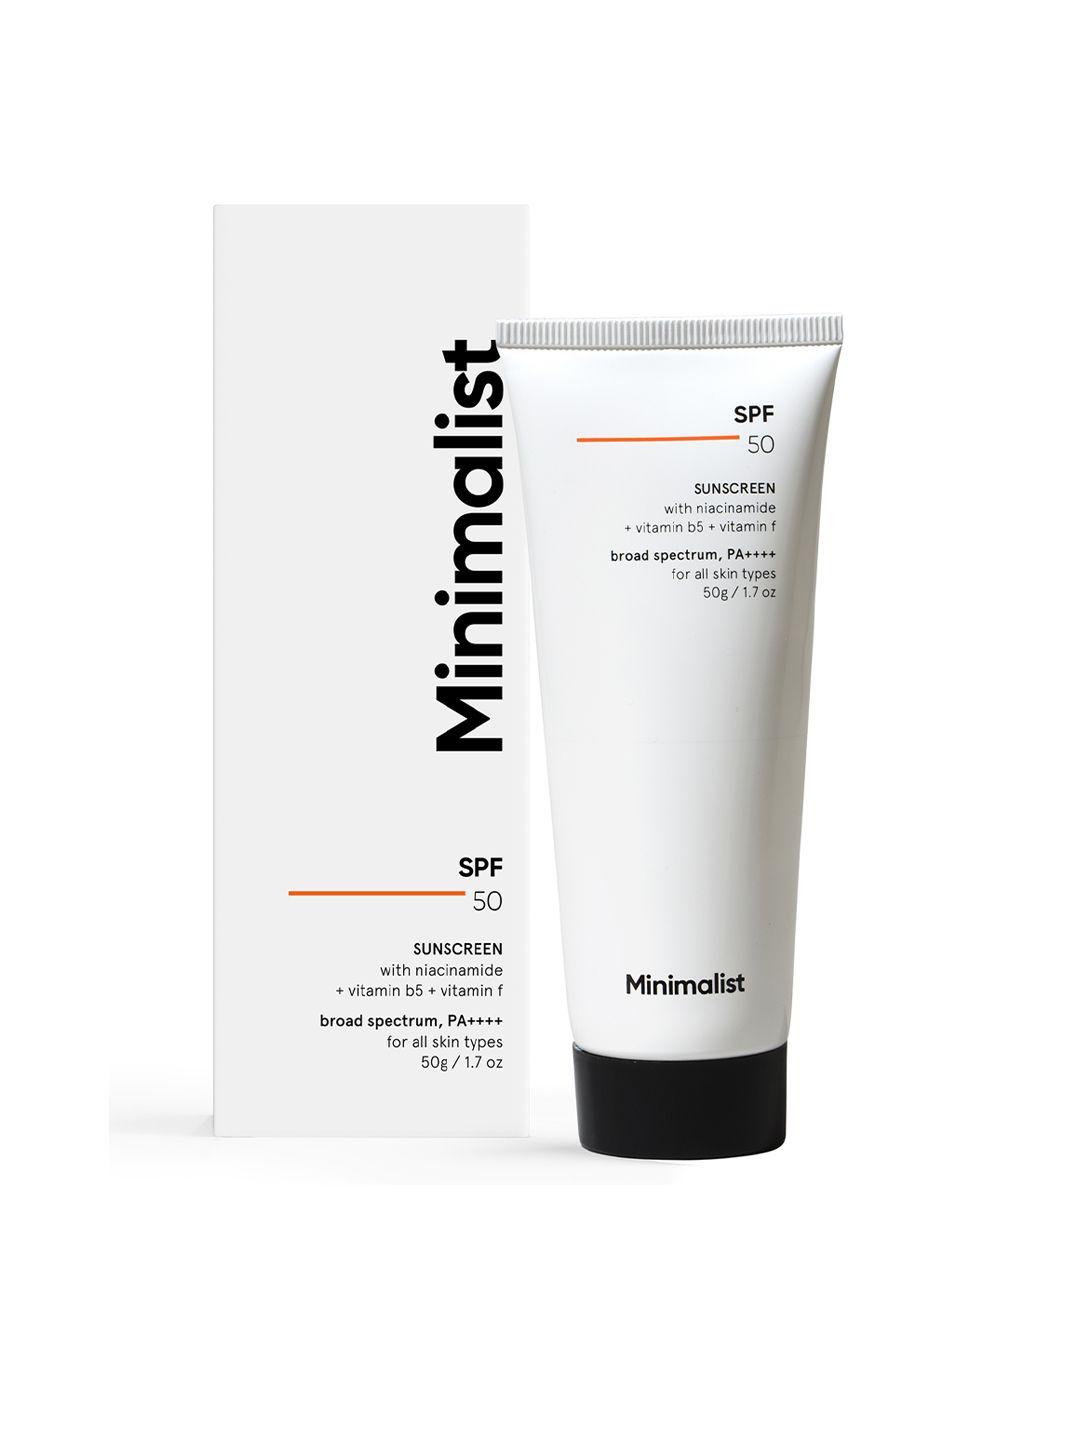 Minimalist SPF 50 PA++++ Multi Vitamin Sunscreen